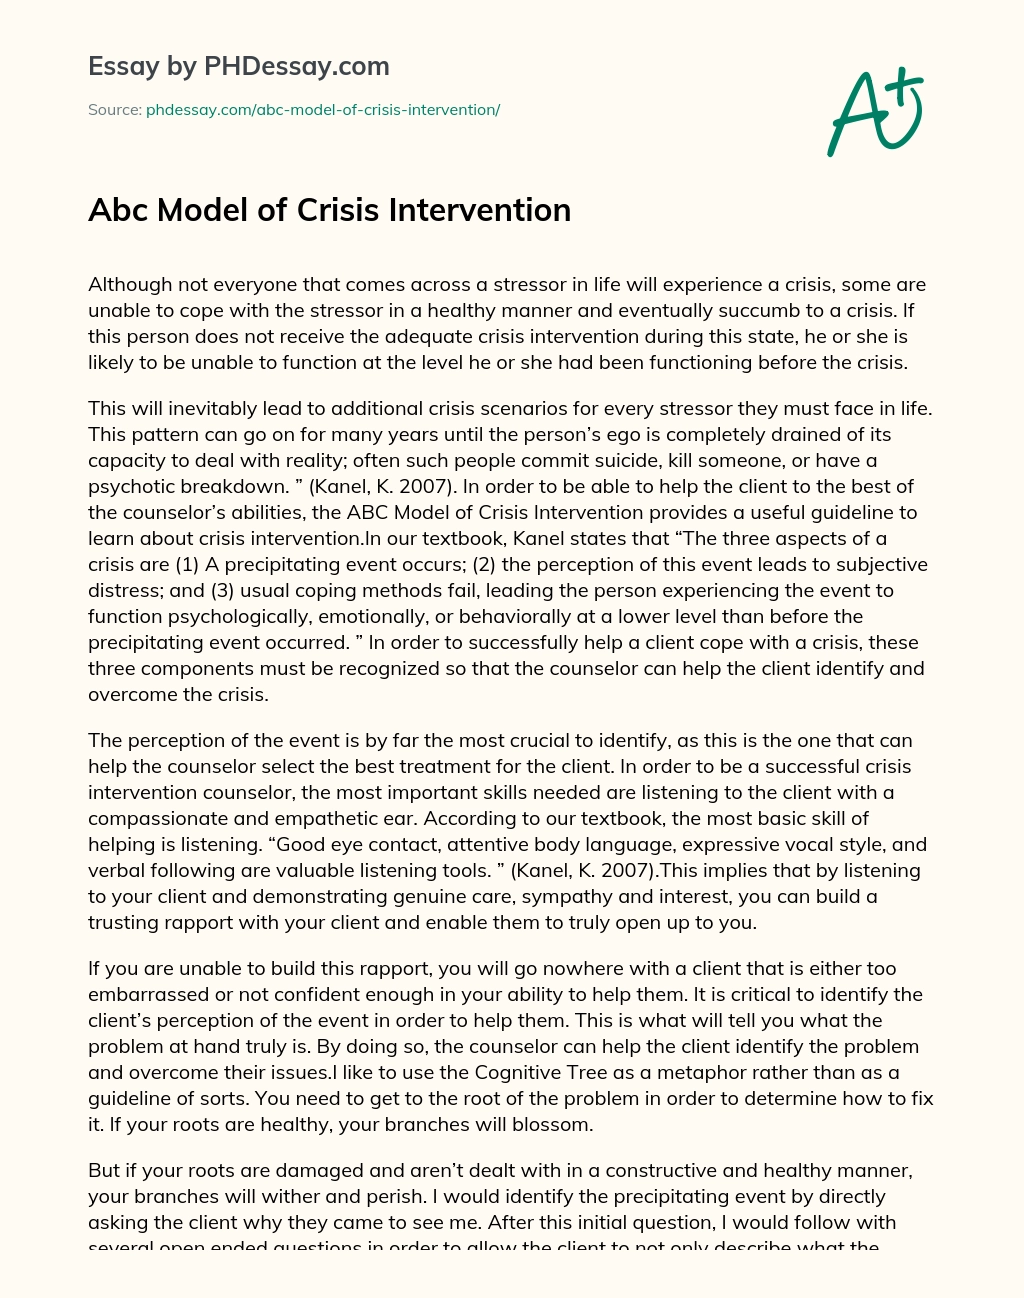 Abc Model of Crisis Intervention essay